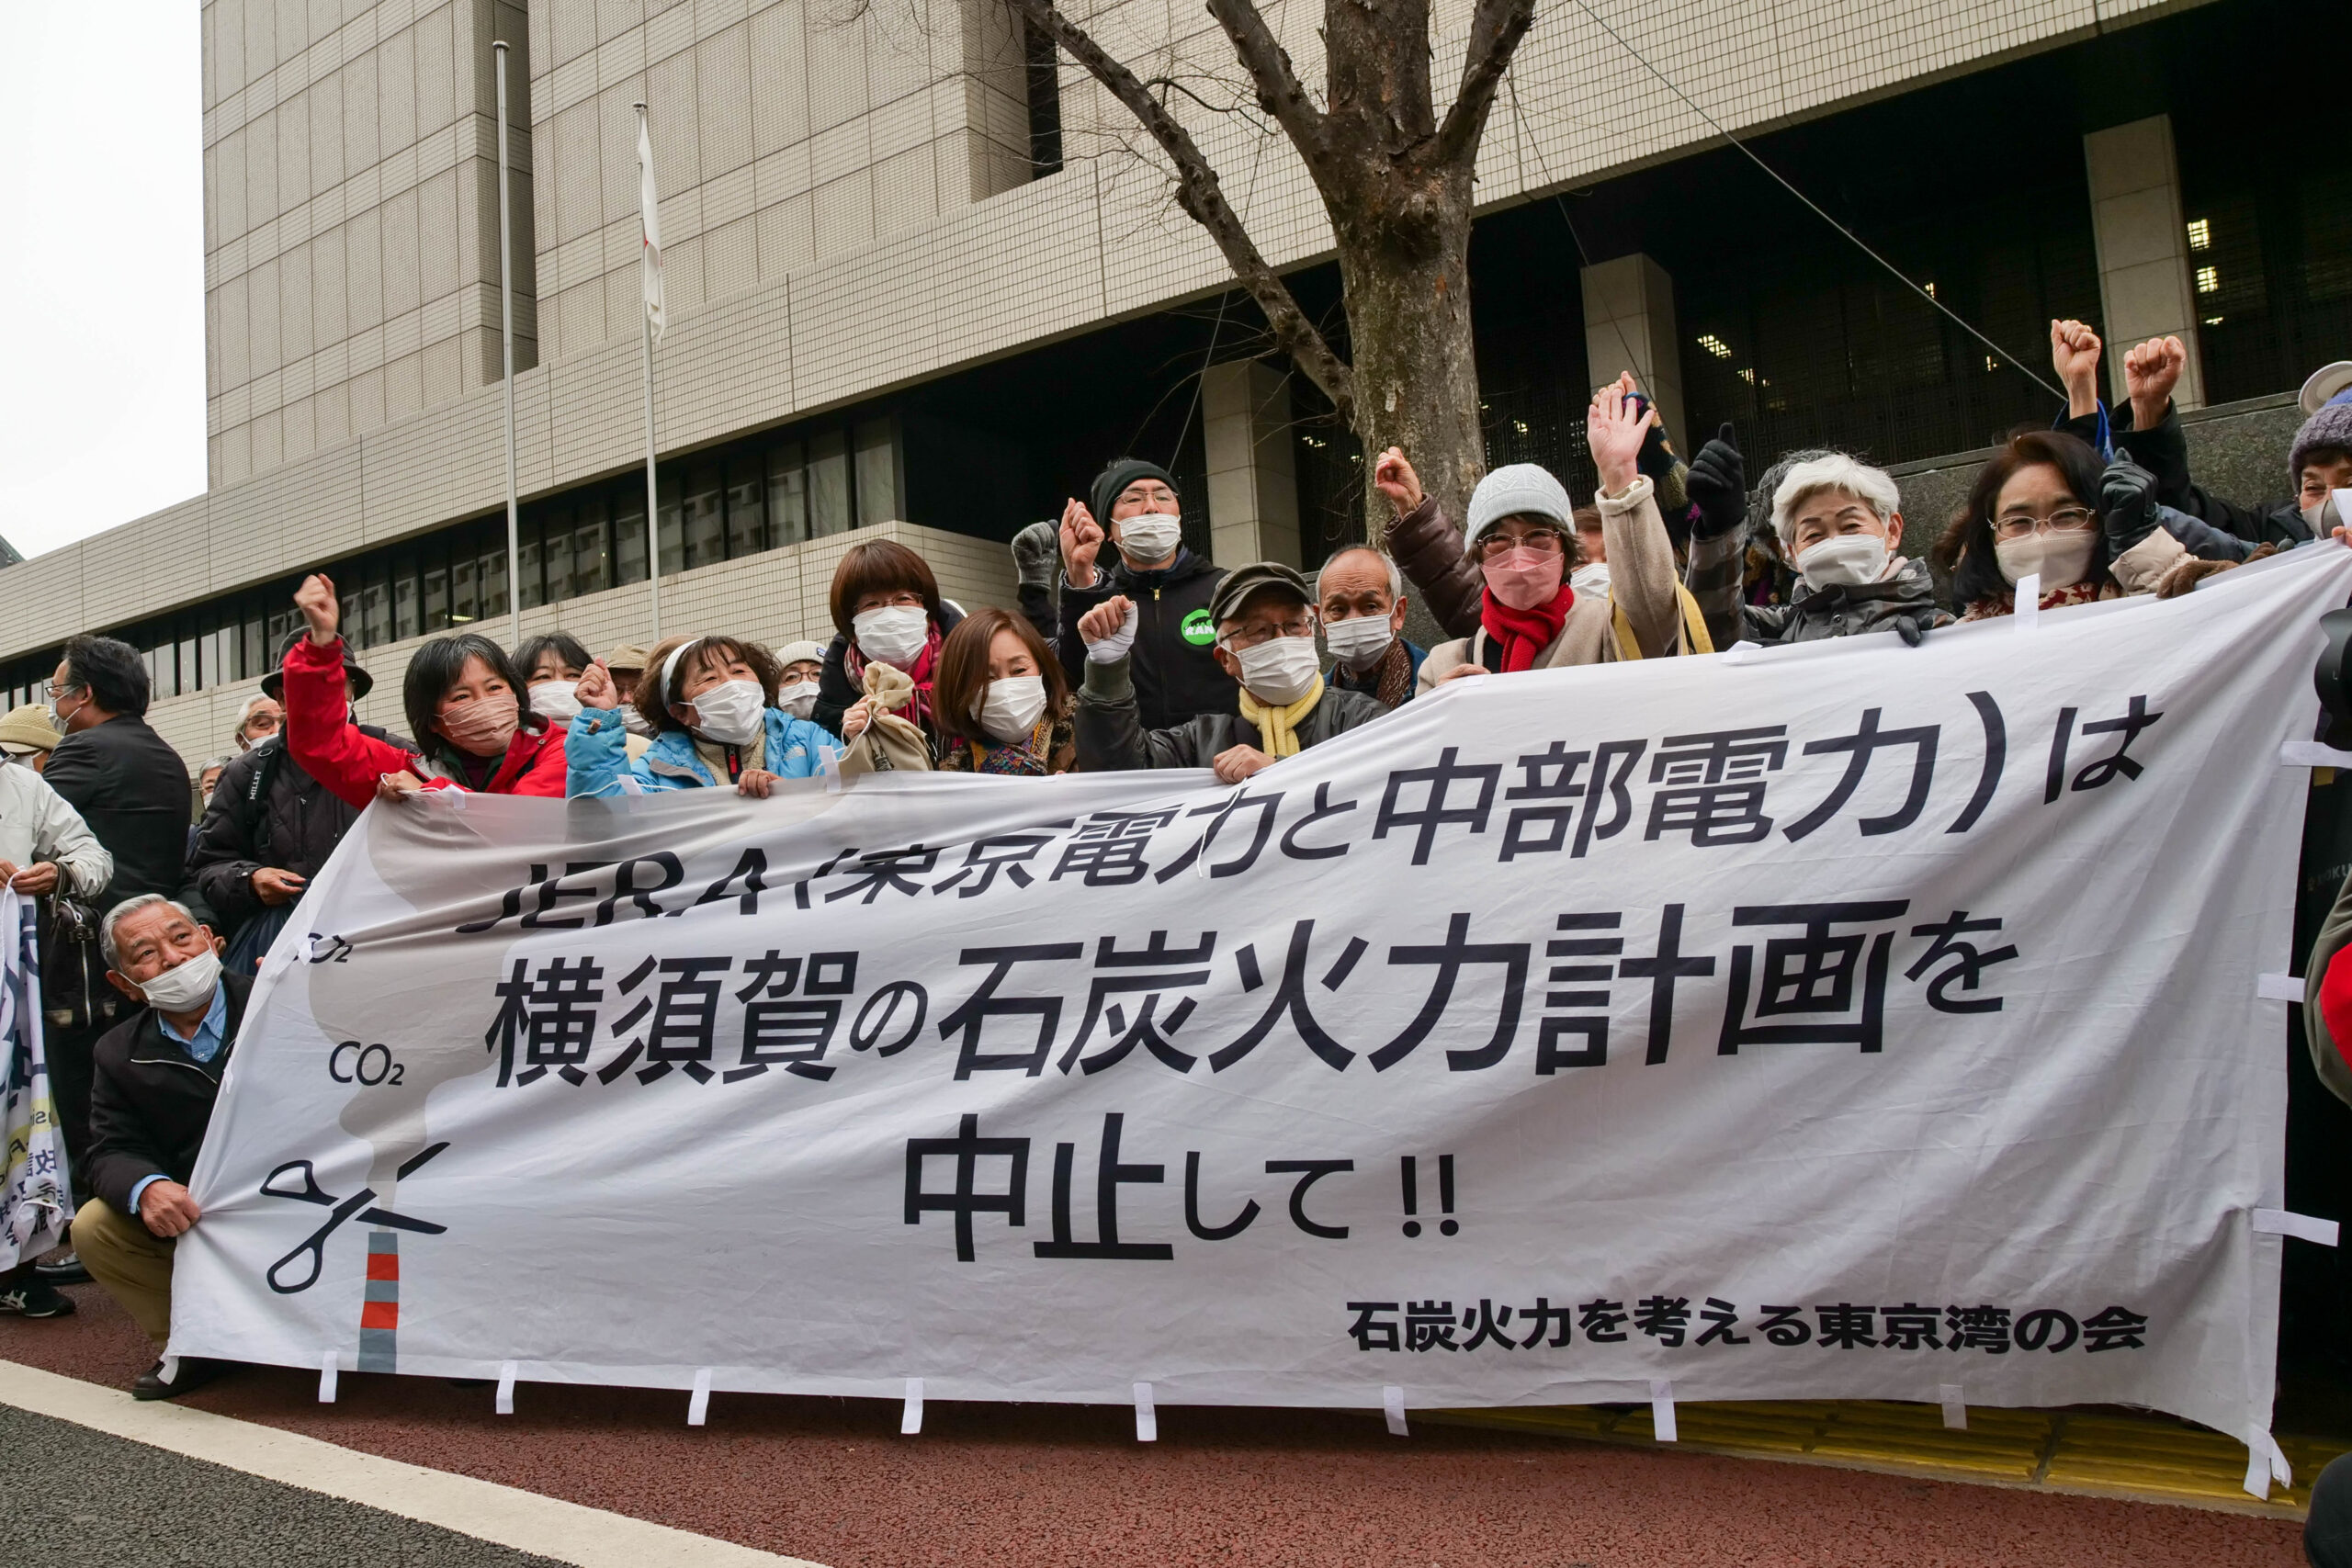 【News】Unjust Ruling in Yokosuka Coal-Fired Power Administrative Court Case